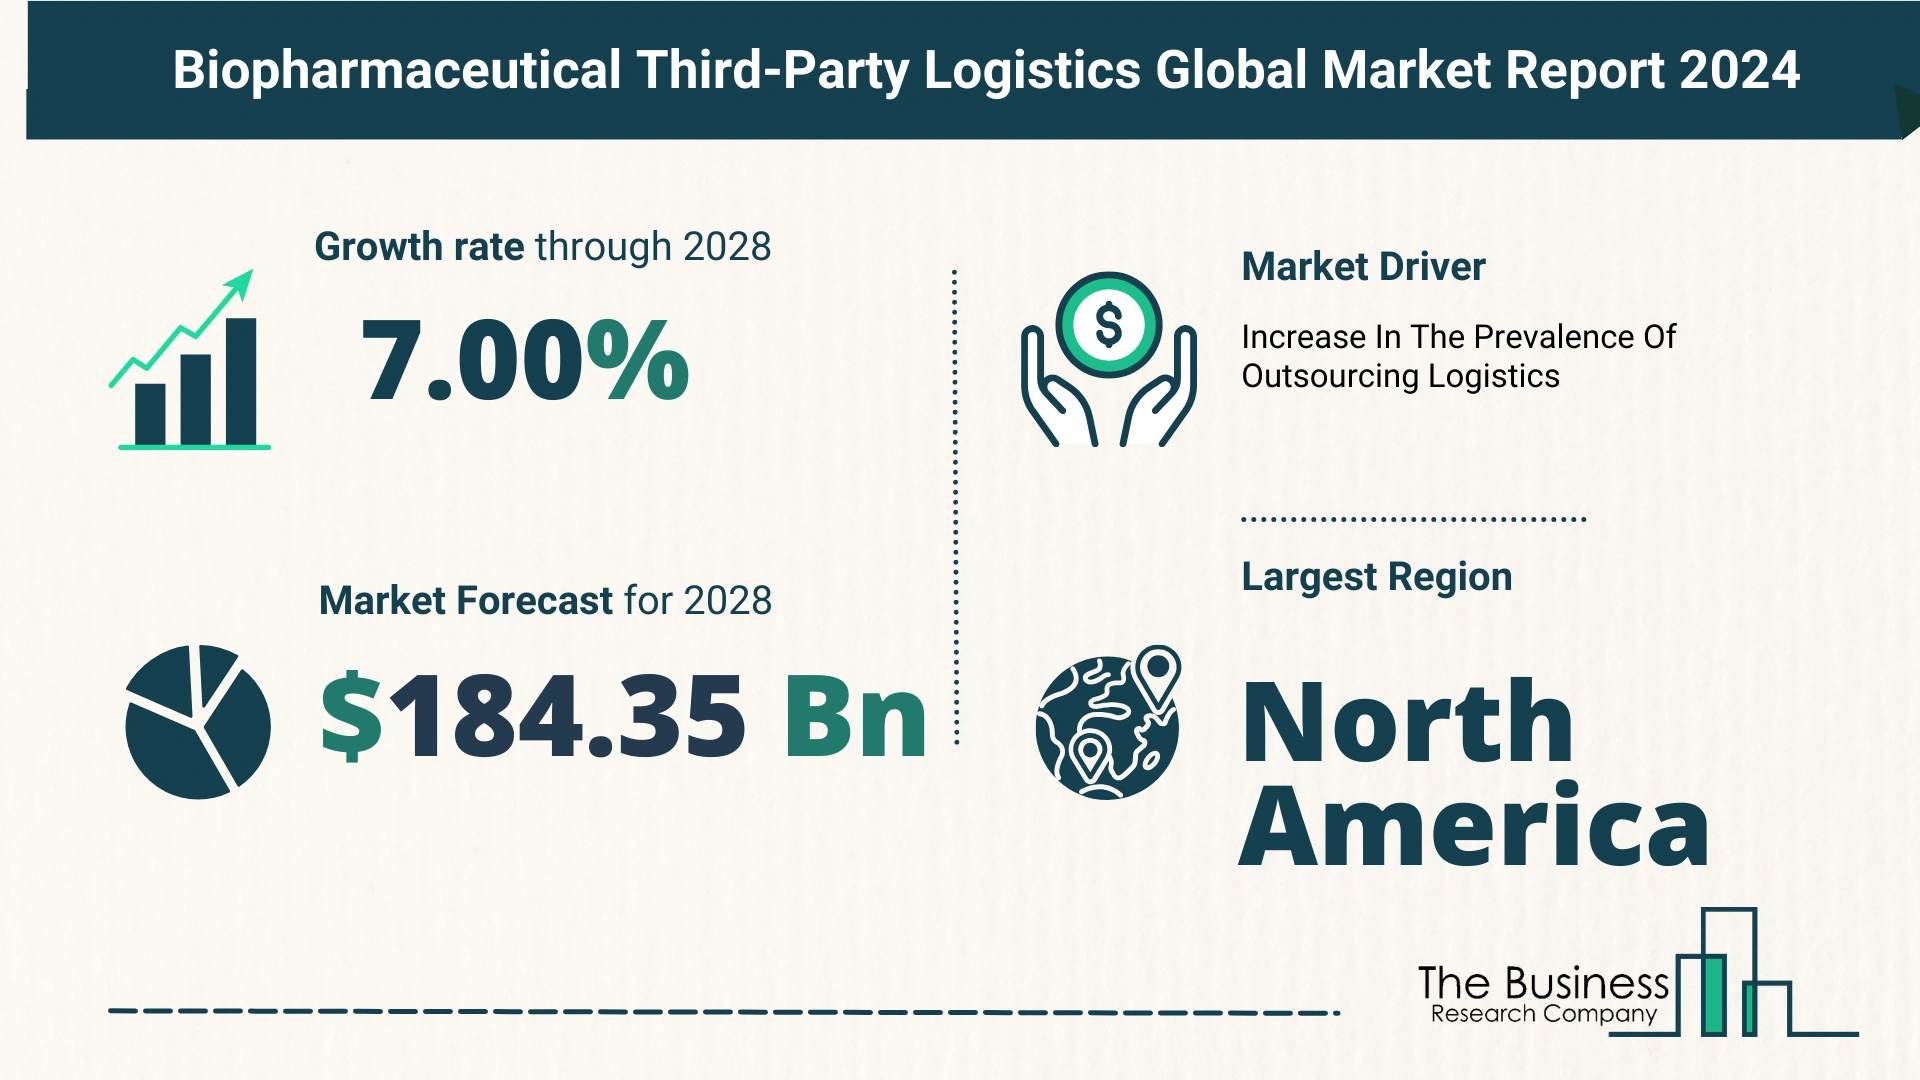 Global Biopharmaceutical Third-Party Logistics Market Size